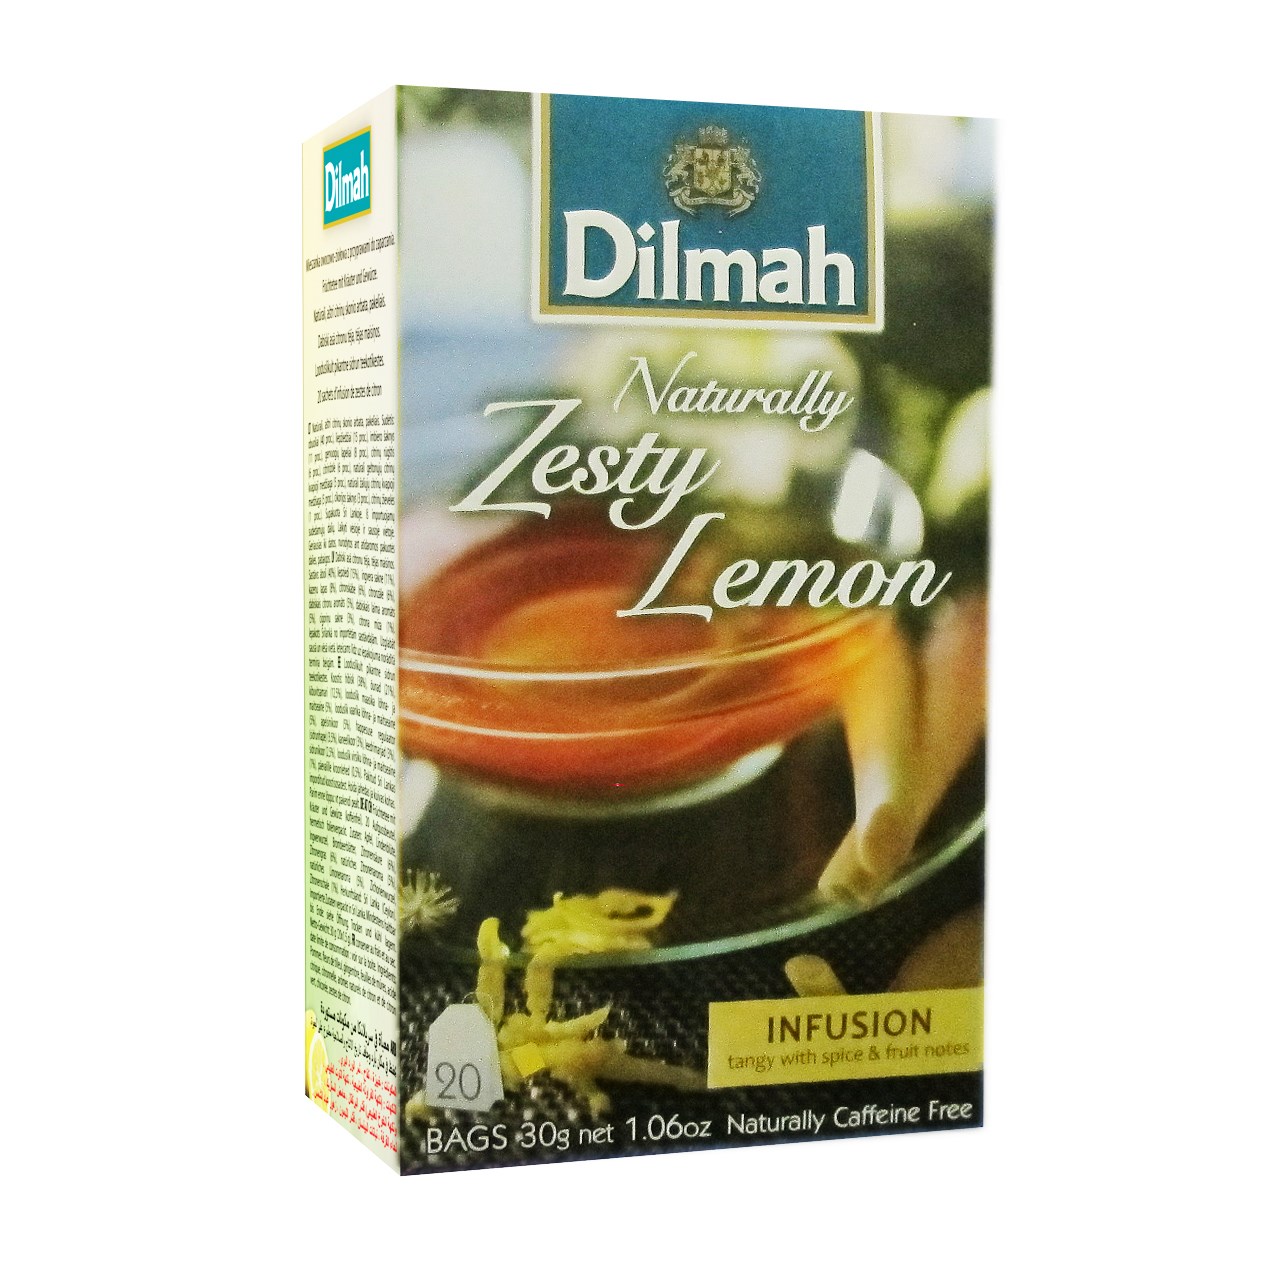 بسته دمنوش گیاهی دیلما مدل Naturally Zesty Lemon